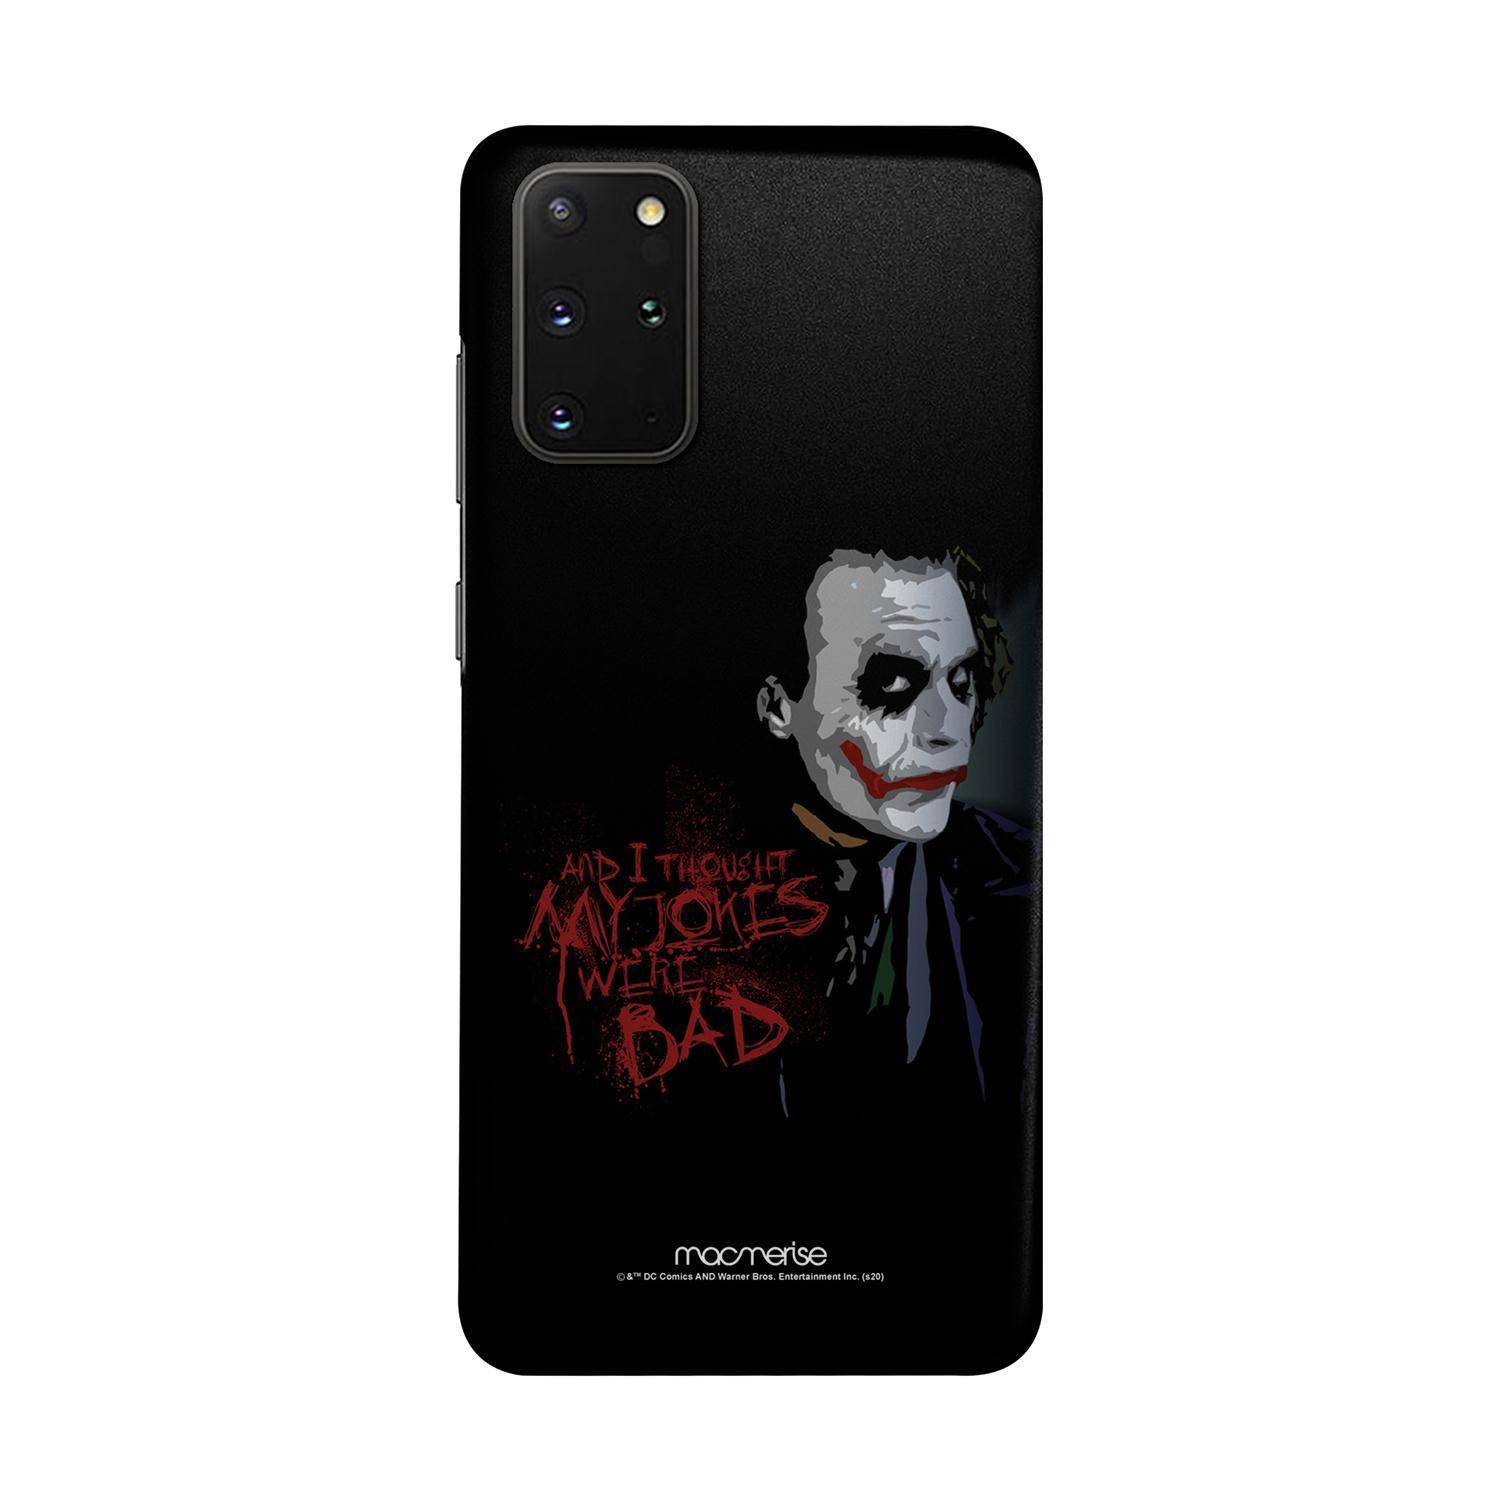 Buy Jokers Sarcasm - Sleek Phone Case for Samsung S20 Plus Online